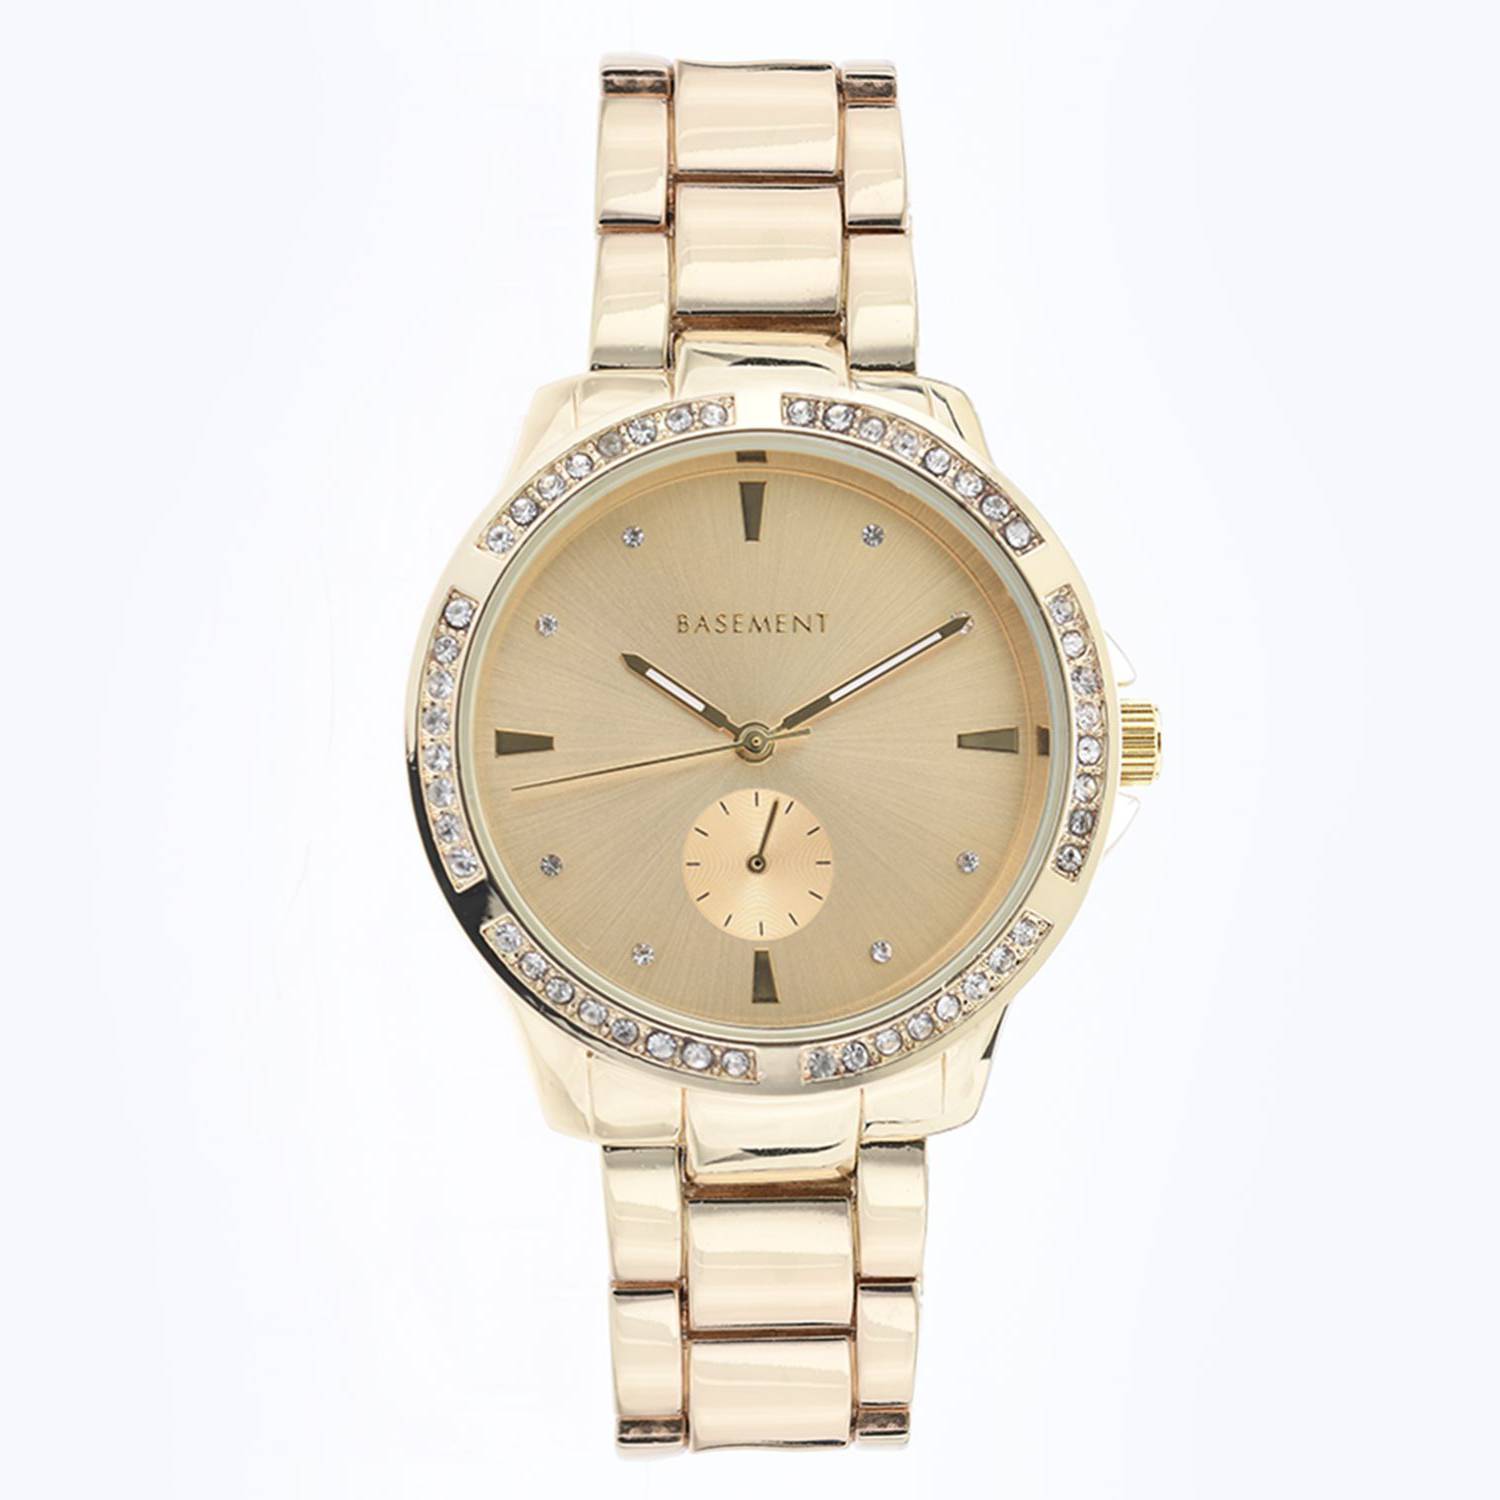 Reloj Mujer Dorado Con Tablero Blanco L1270-1 LOIX